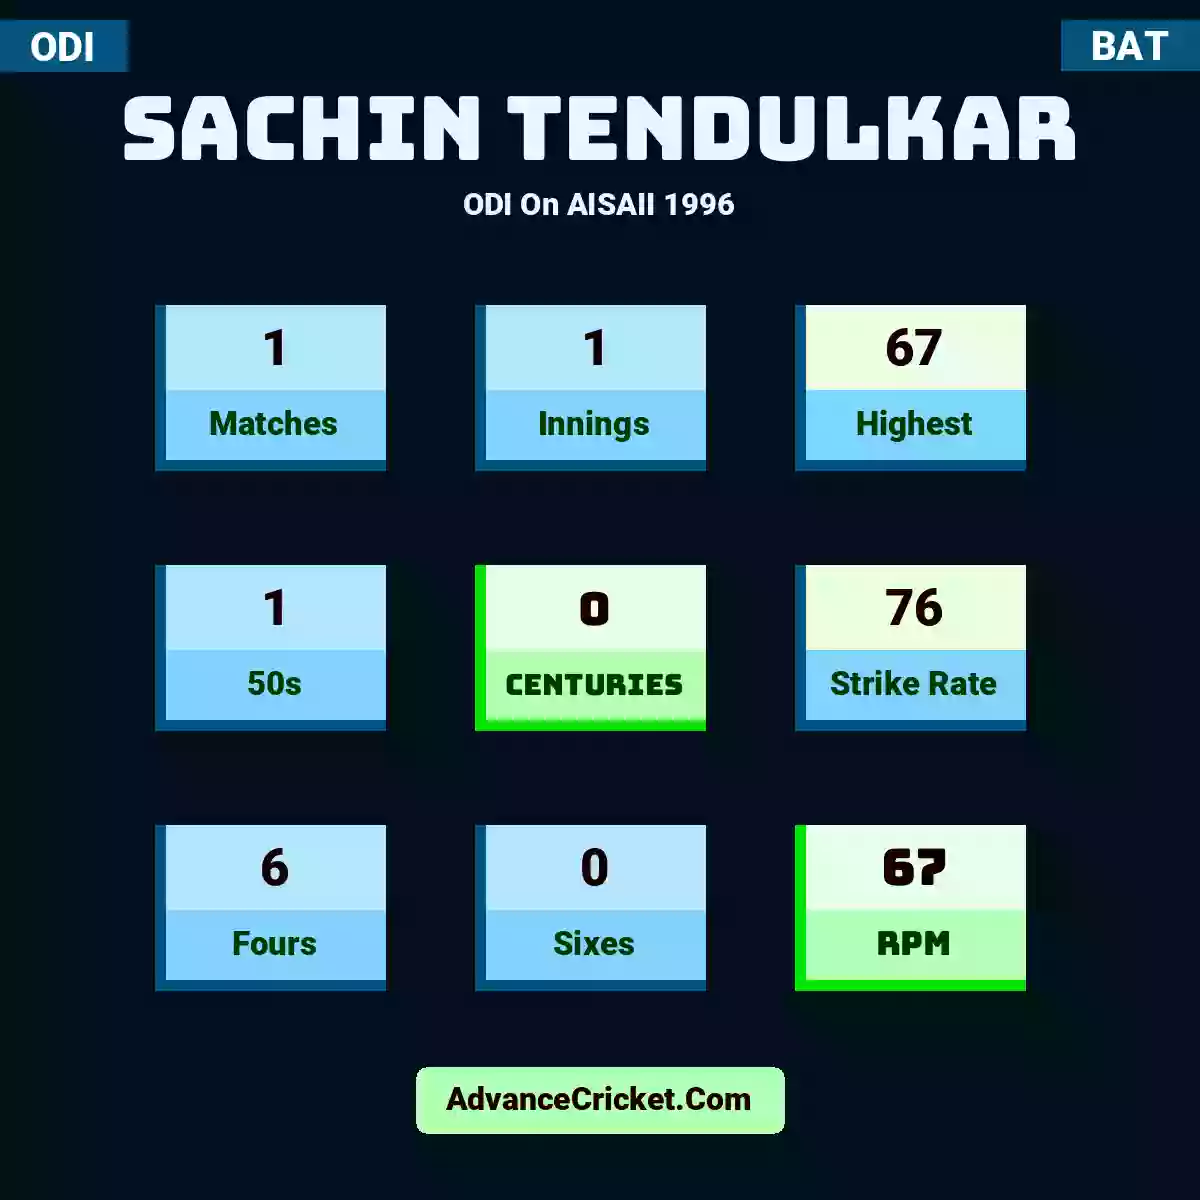 Sachin Tendulkar ODI  On AISAII 1996, Sachin Tendulkar played 1 matches, scored 67 runs as highest, 1 half-centuries, and 0 centuries, with a strike rate of 76. S.Tendulkar hit 6 fours and 0 sixes, with an RPM of 67.